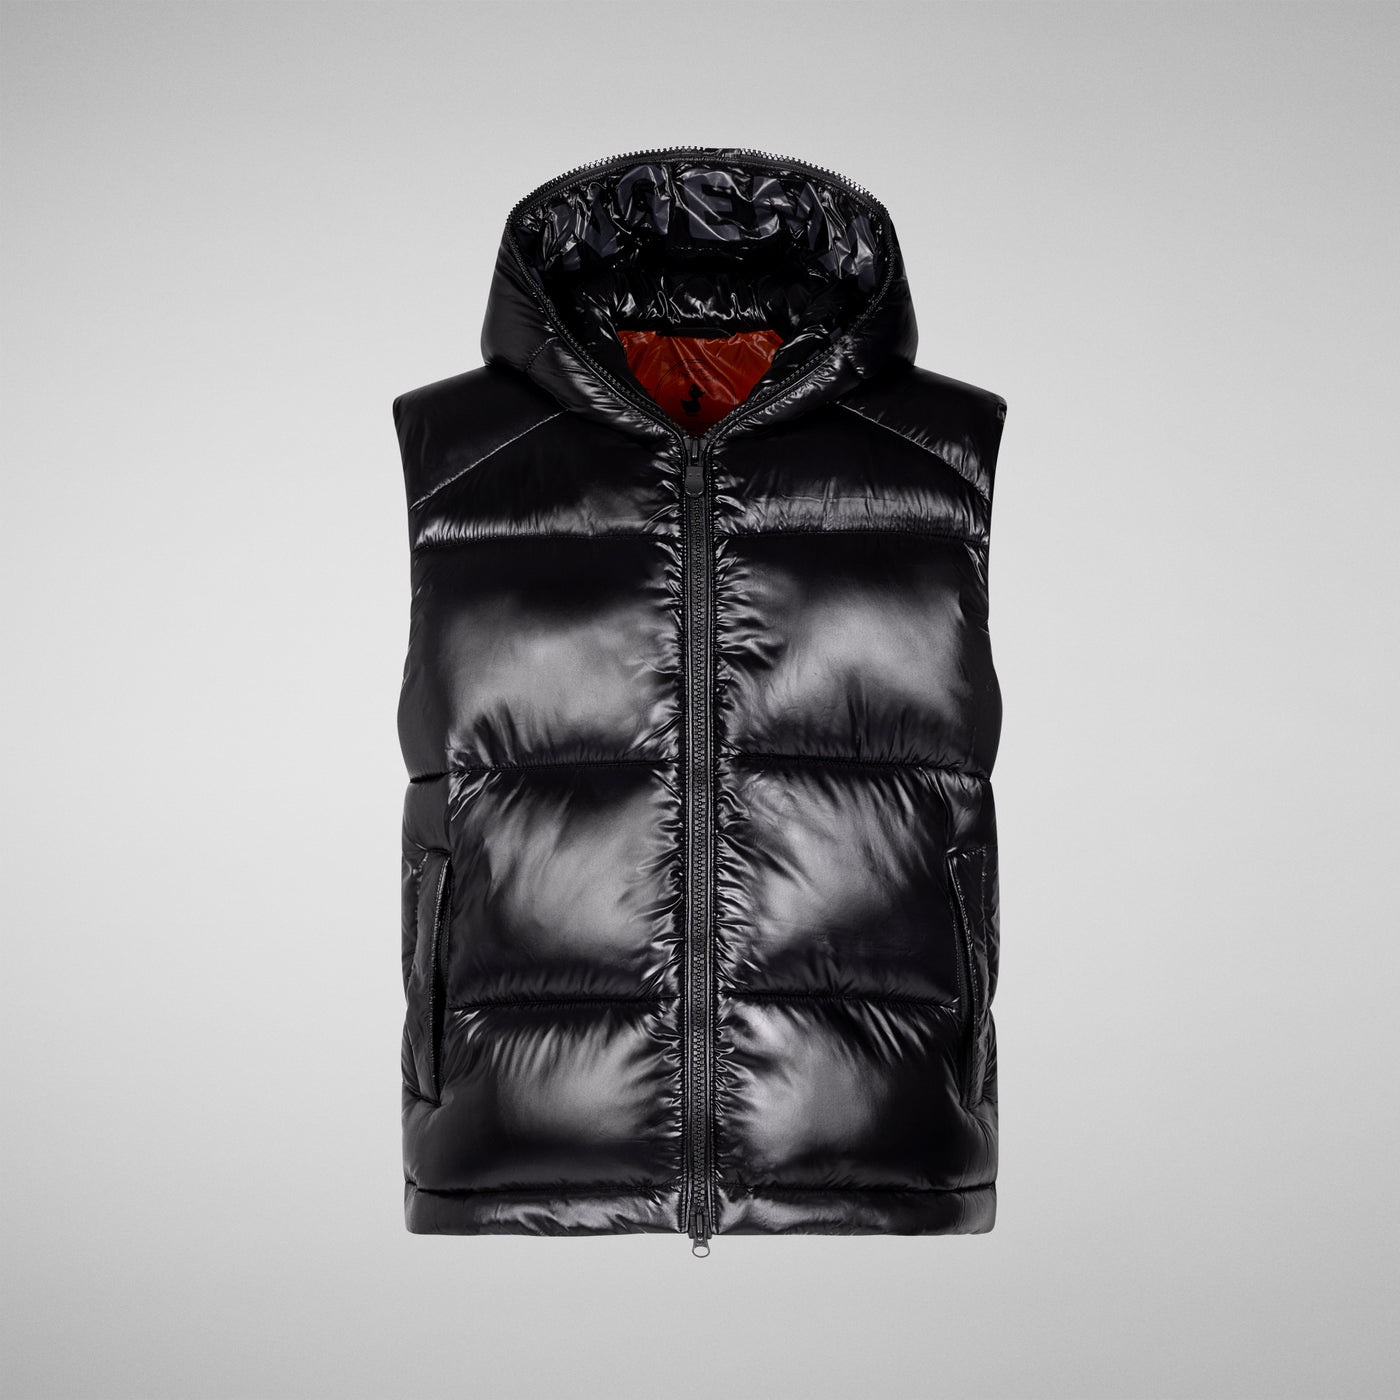 Product View of Men's Dexter Hooded Puffer Vest in Black